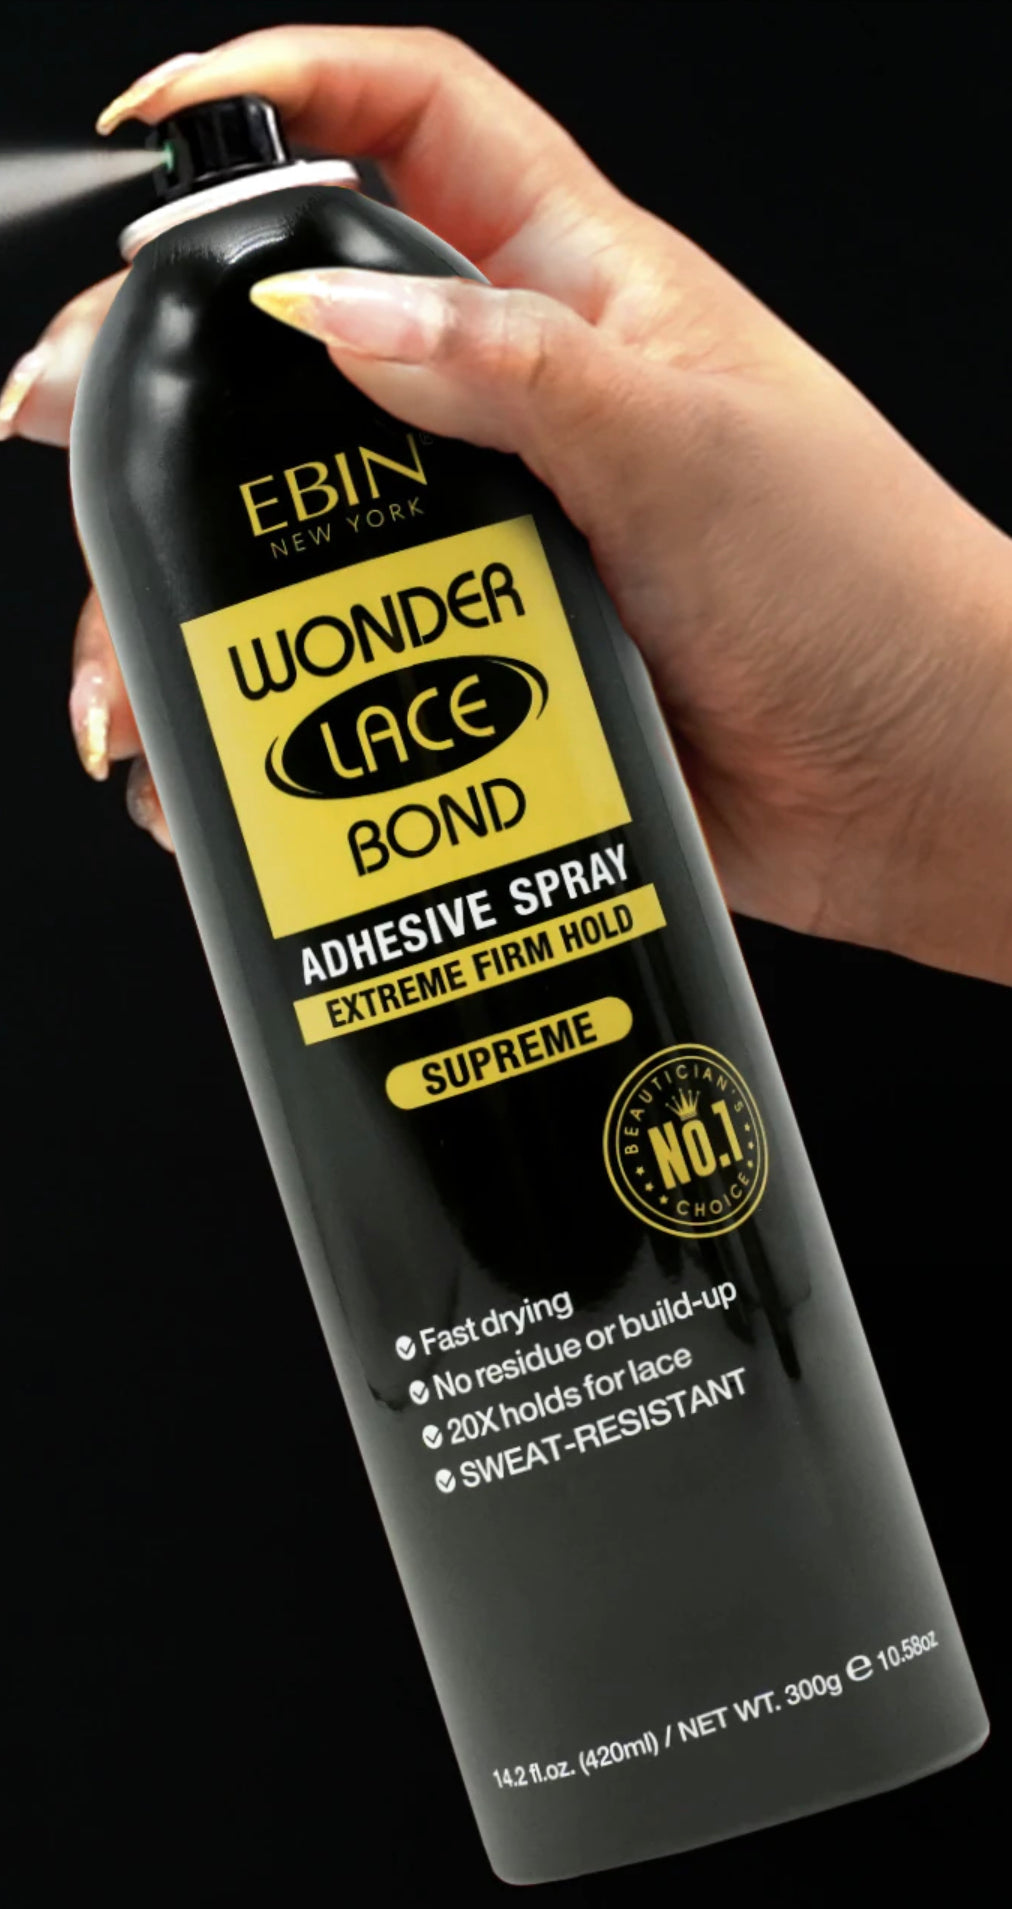 Ebin Wonder Lace Bond Lace Melt Spray (Supreme)